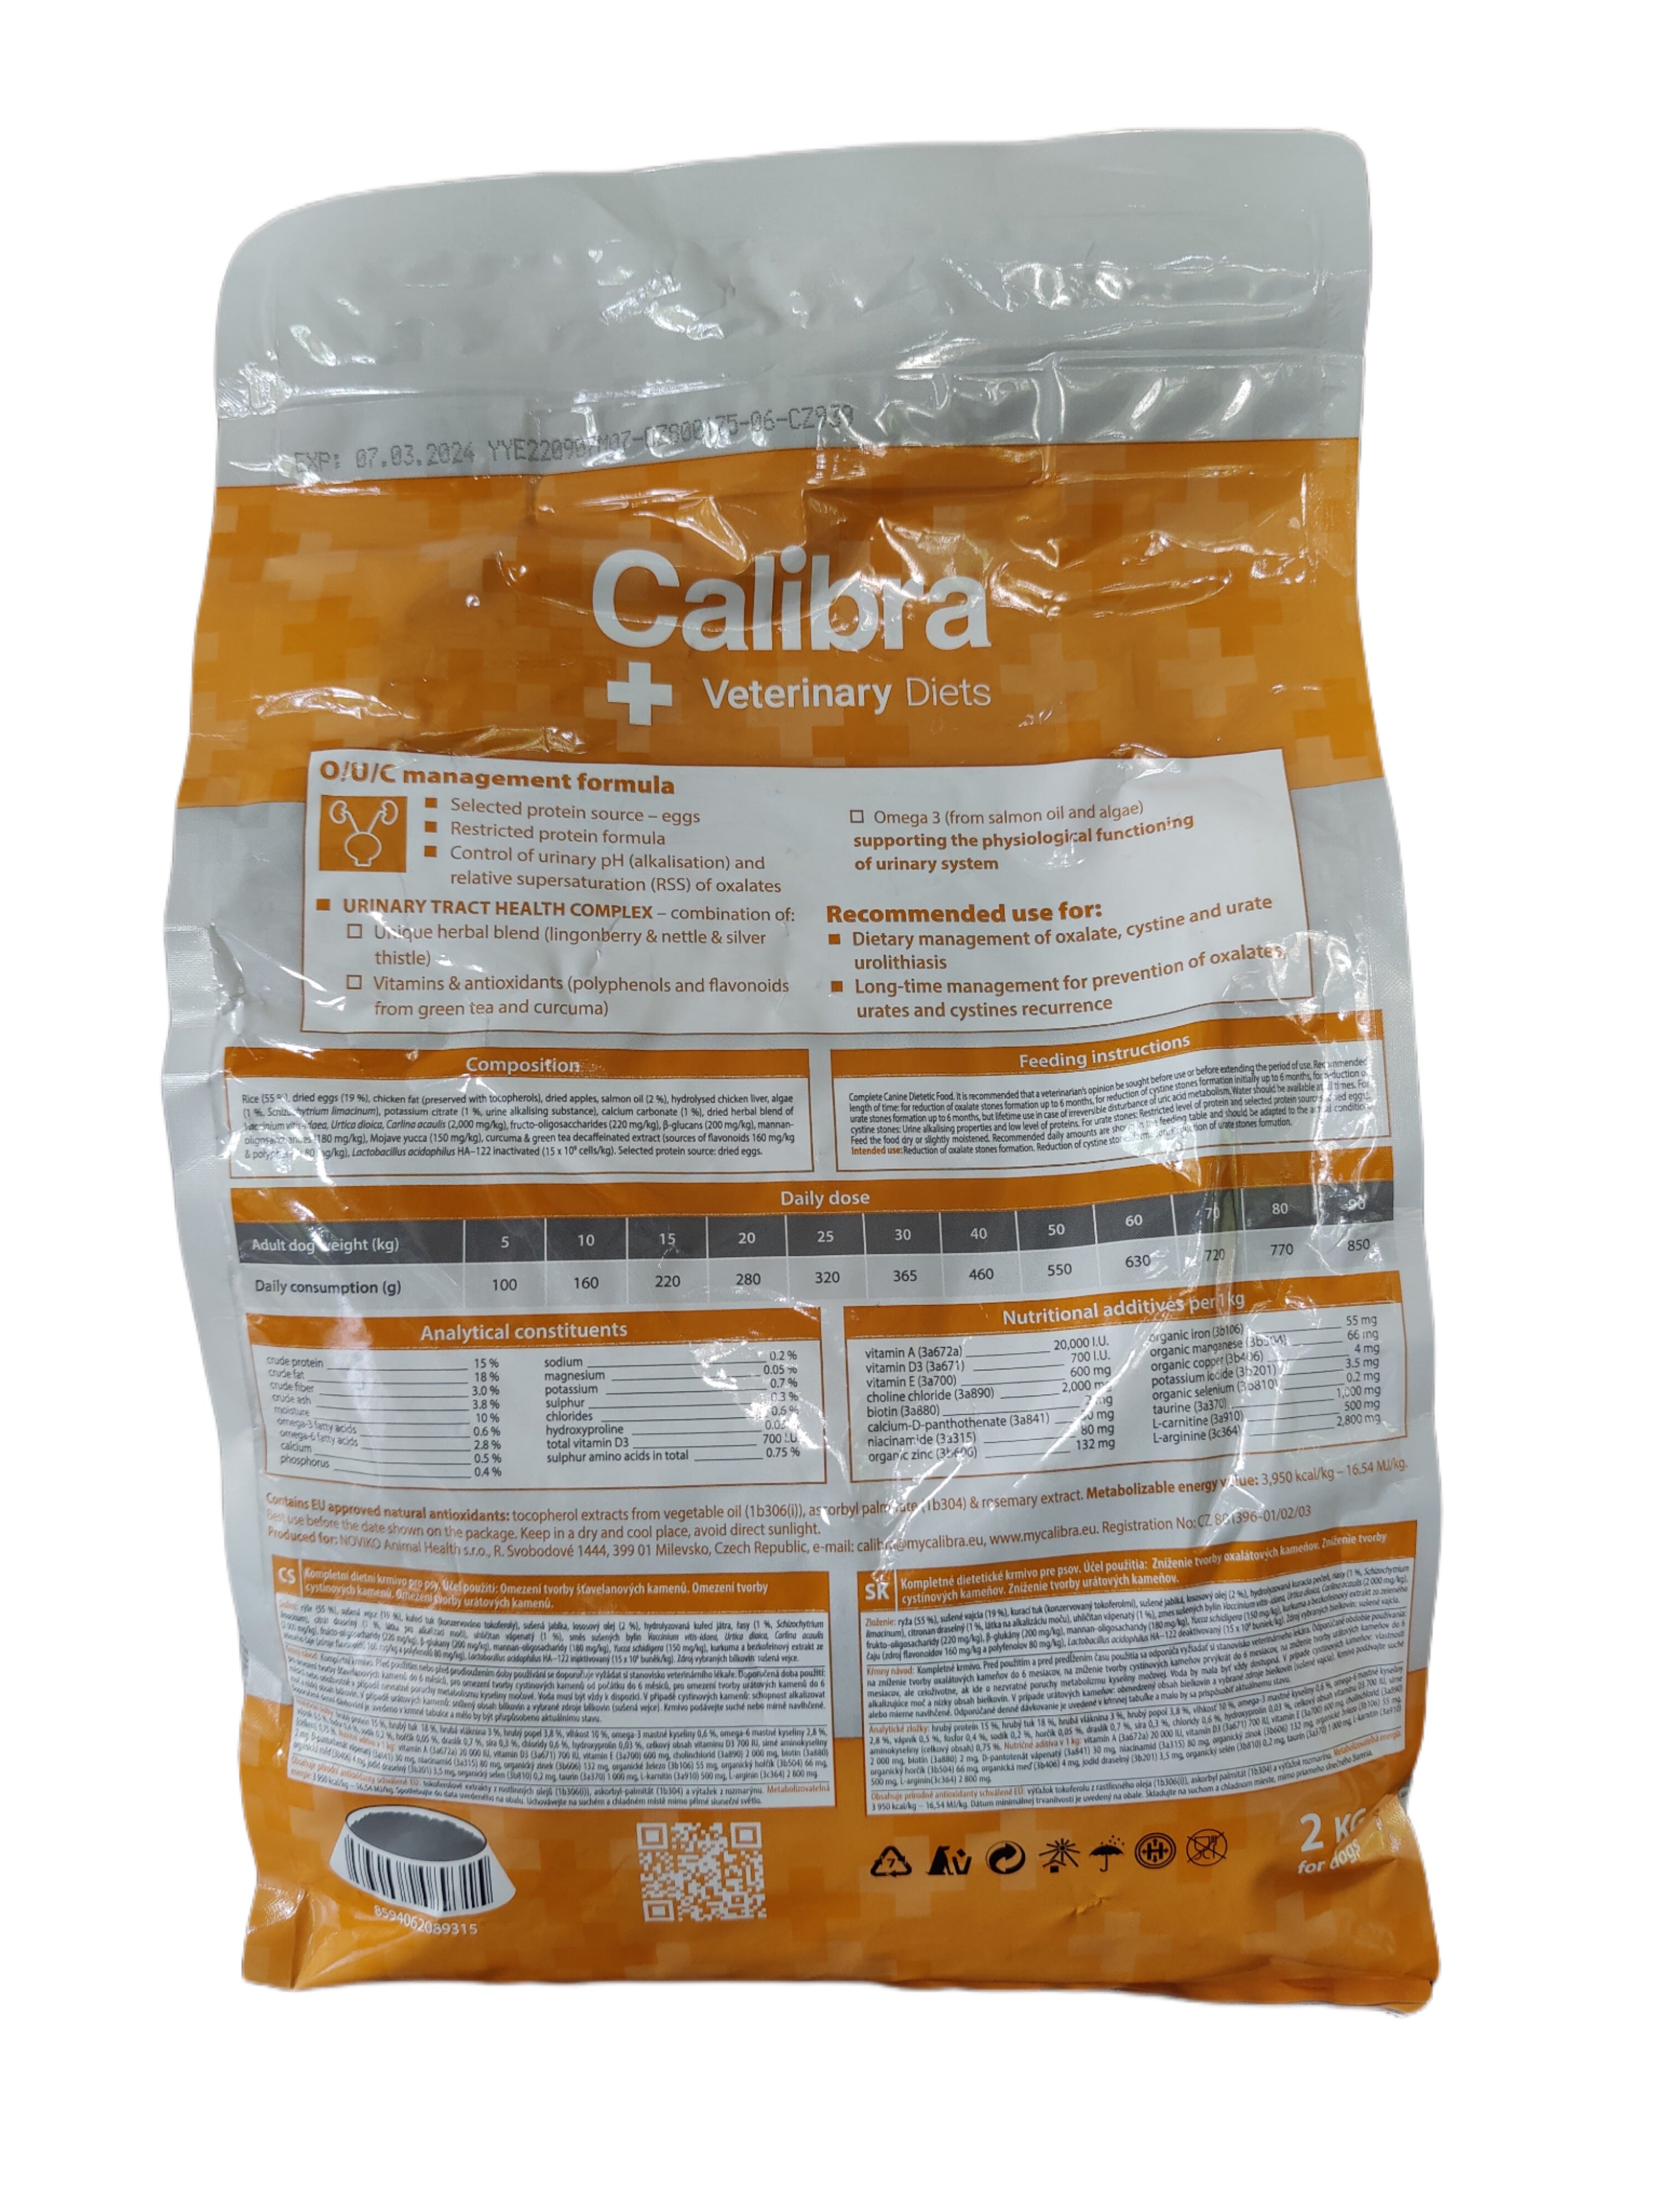 Calibra oxalate and urate and cystine Dog Food